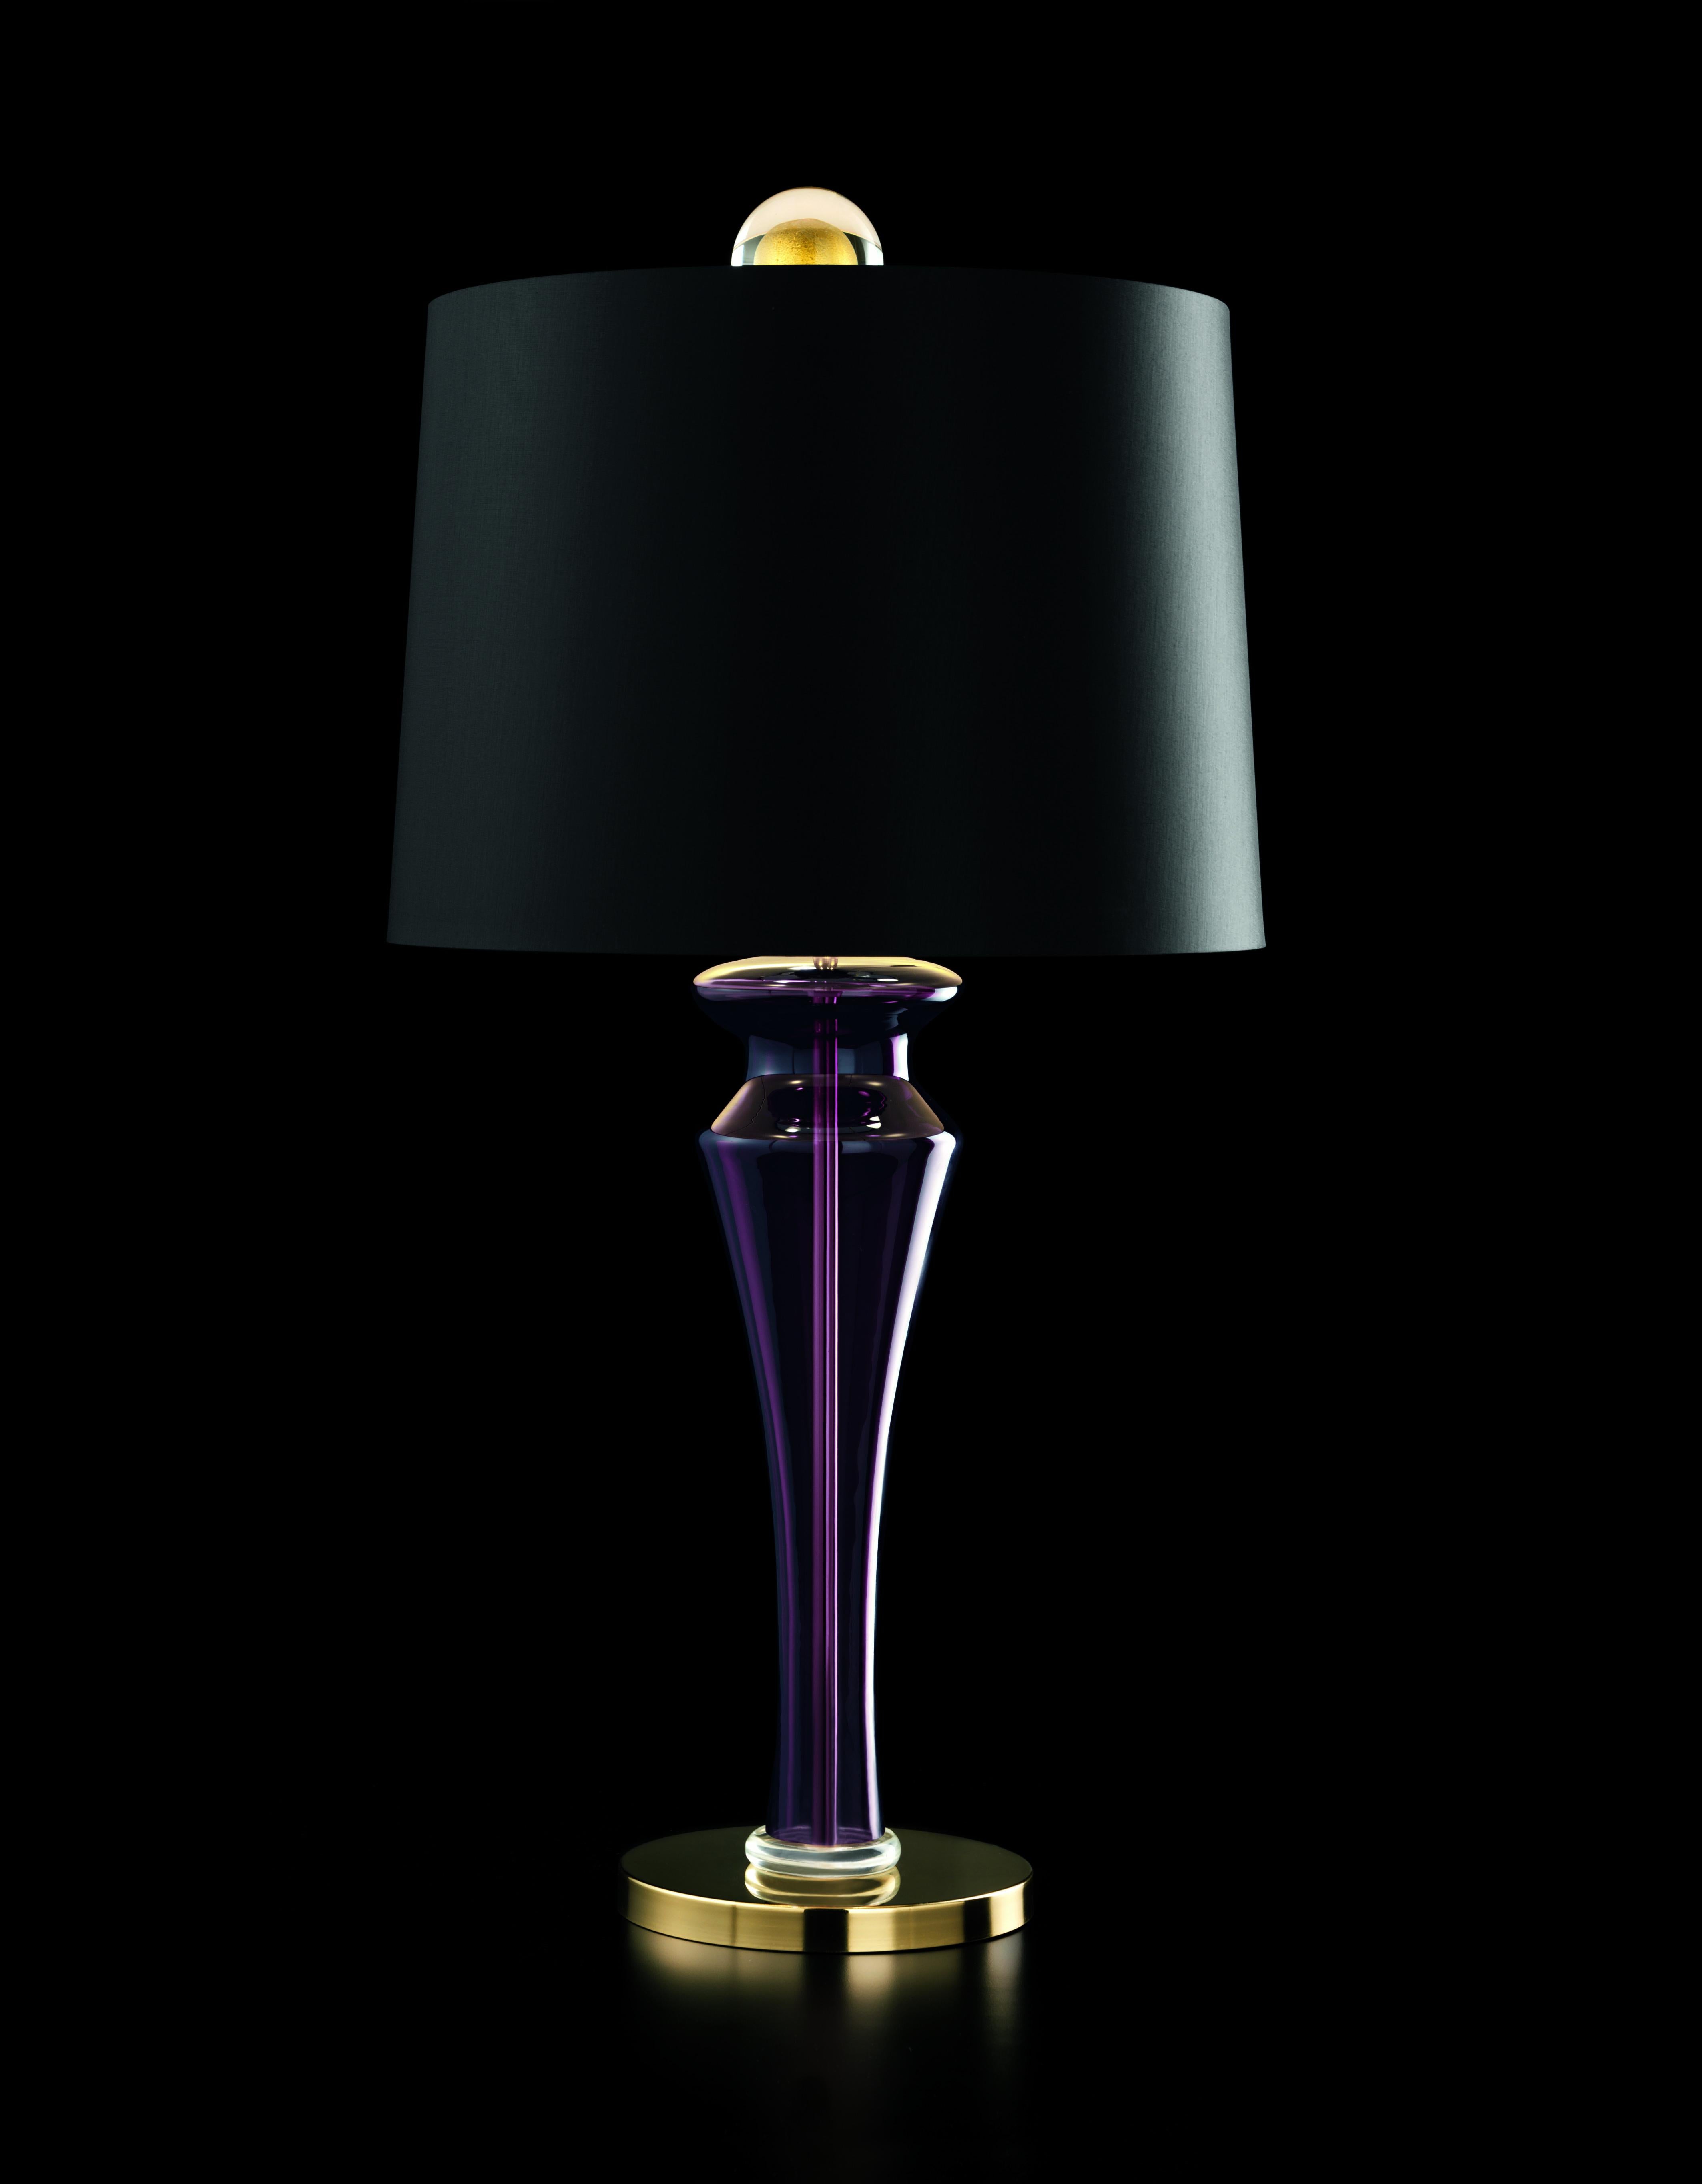 Purple (Violet_VI) Saint Germain 7067 Table Lamp in Glass with Black Shade, by Giorgia Brusemini 2